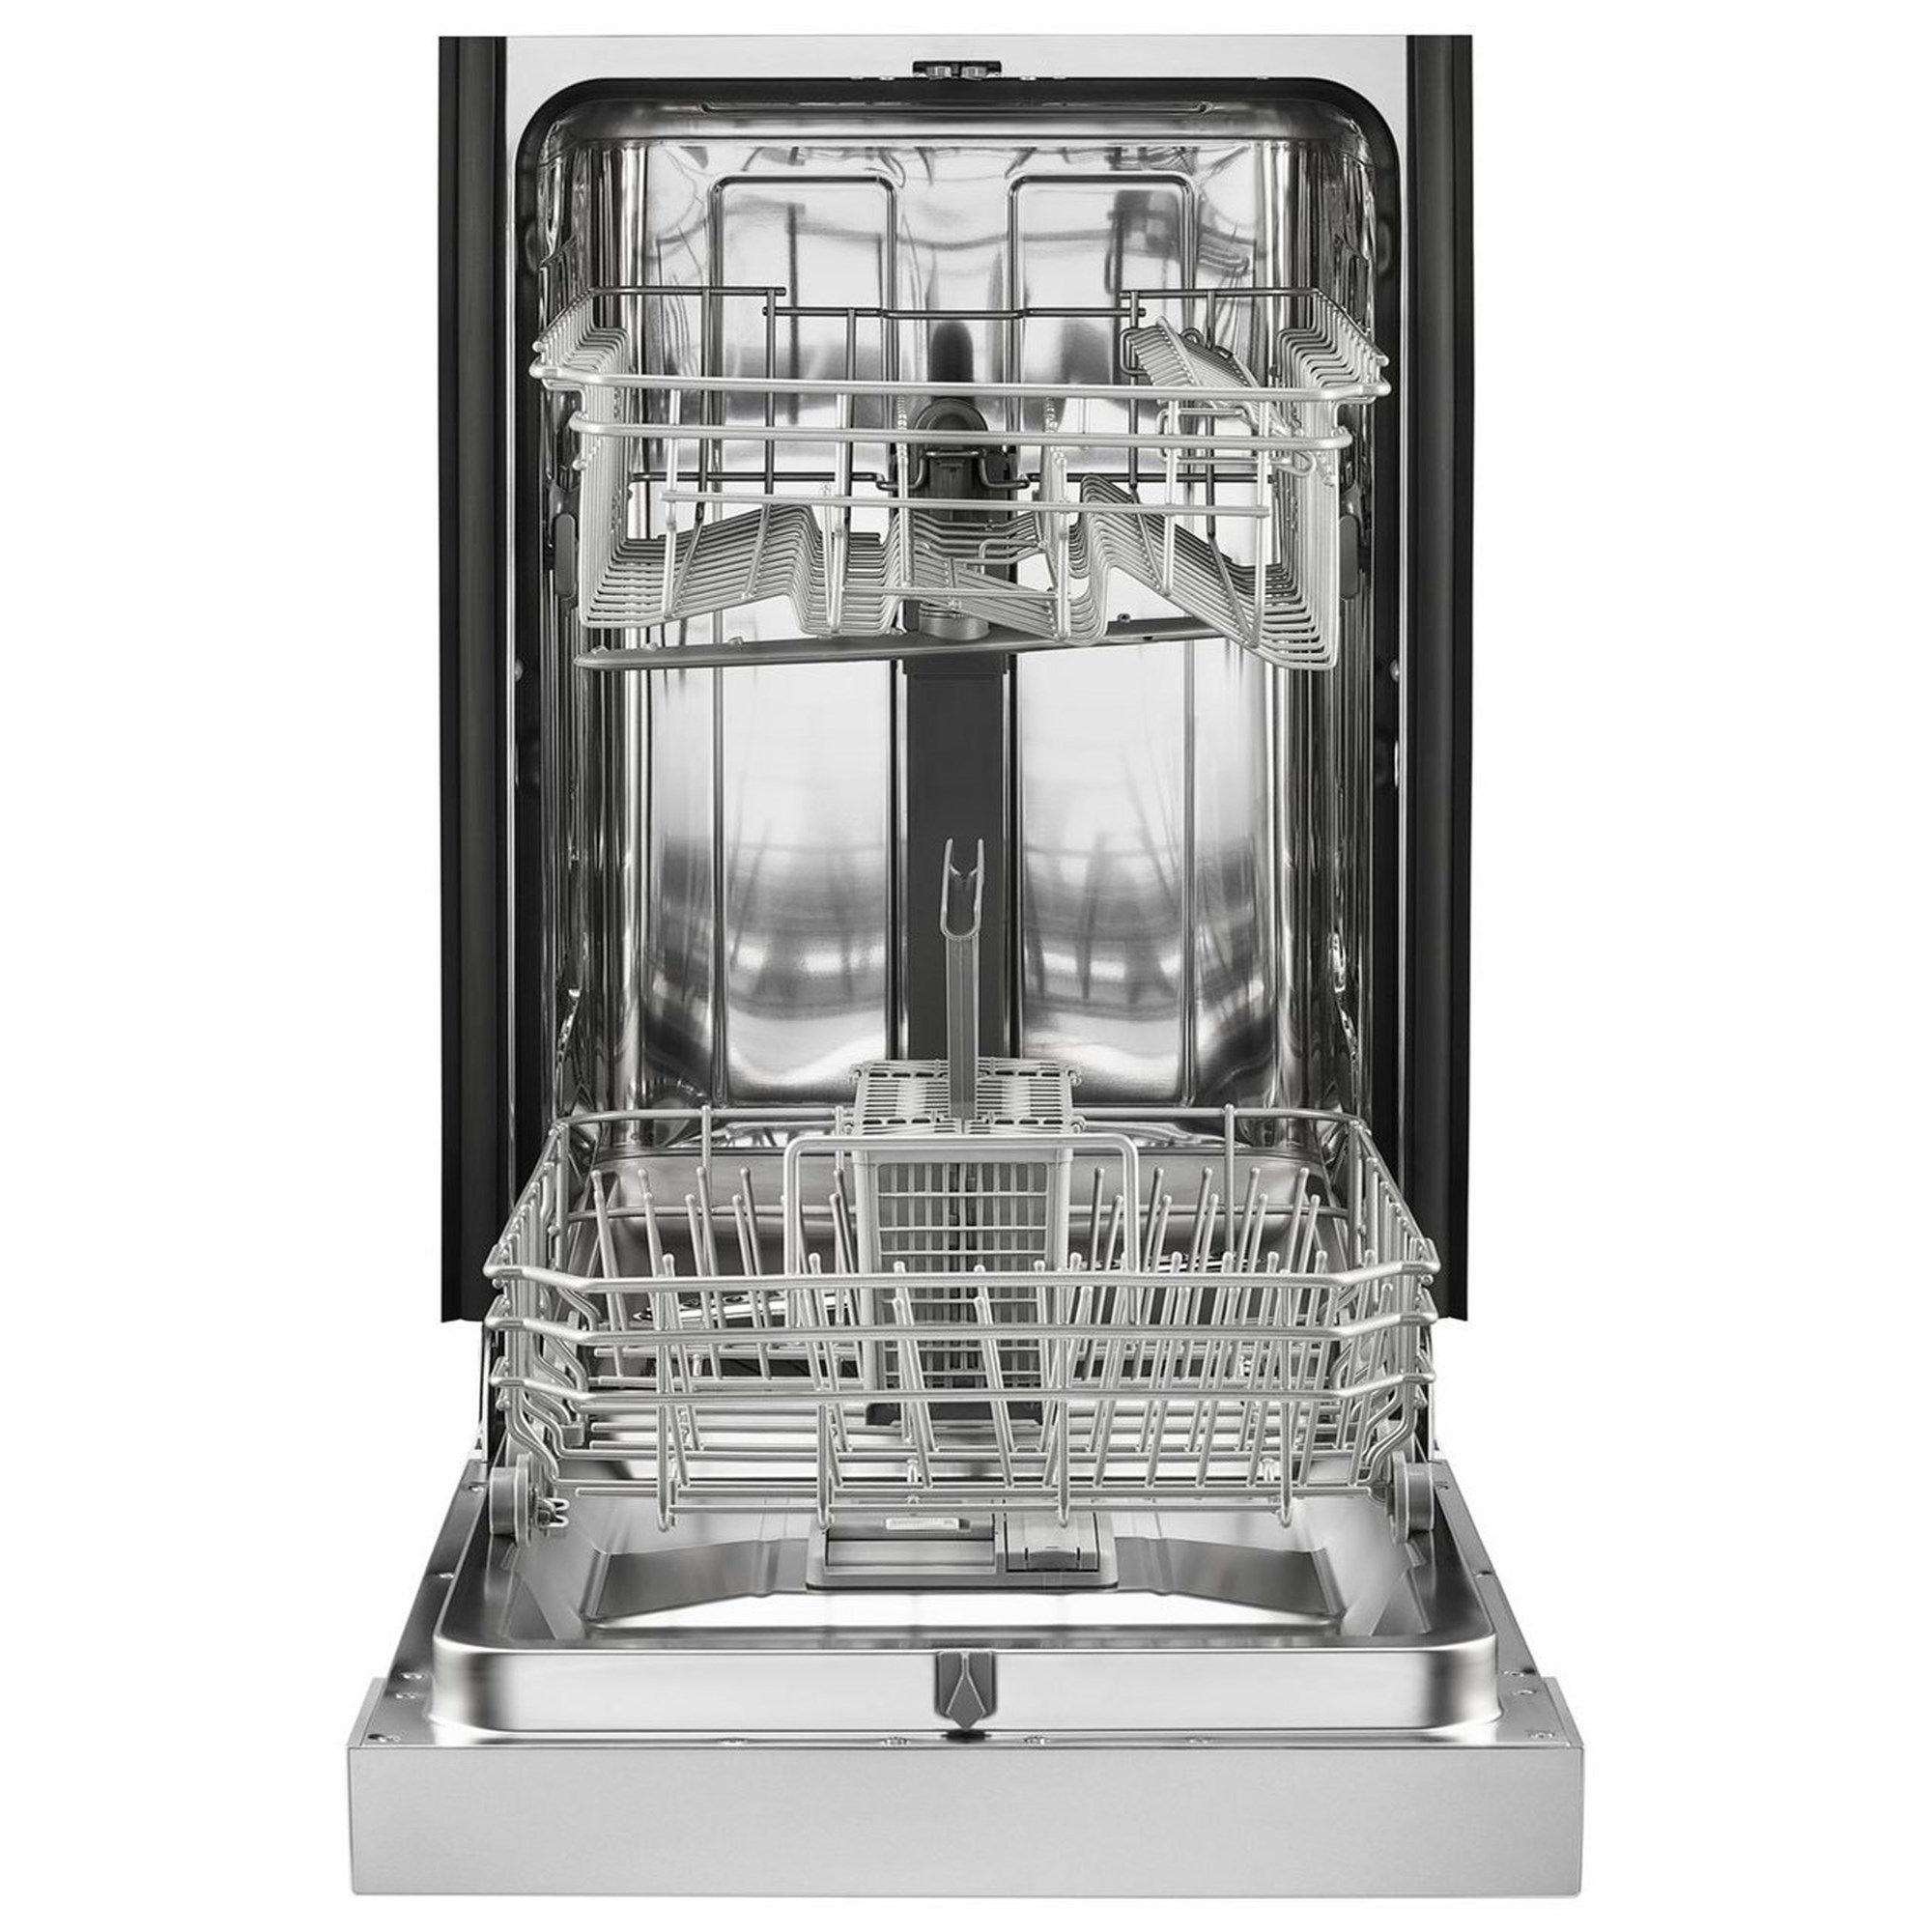 Dishwashers - Whirlpool Small-Space Compact Dishwasher